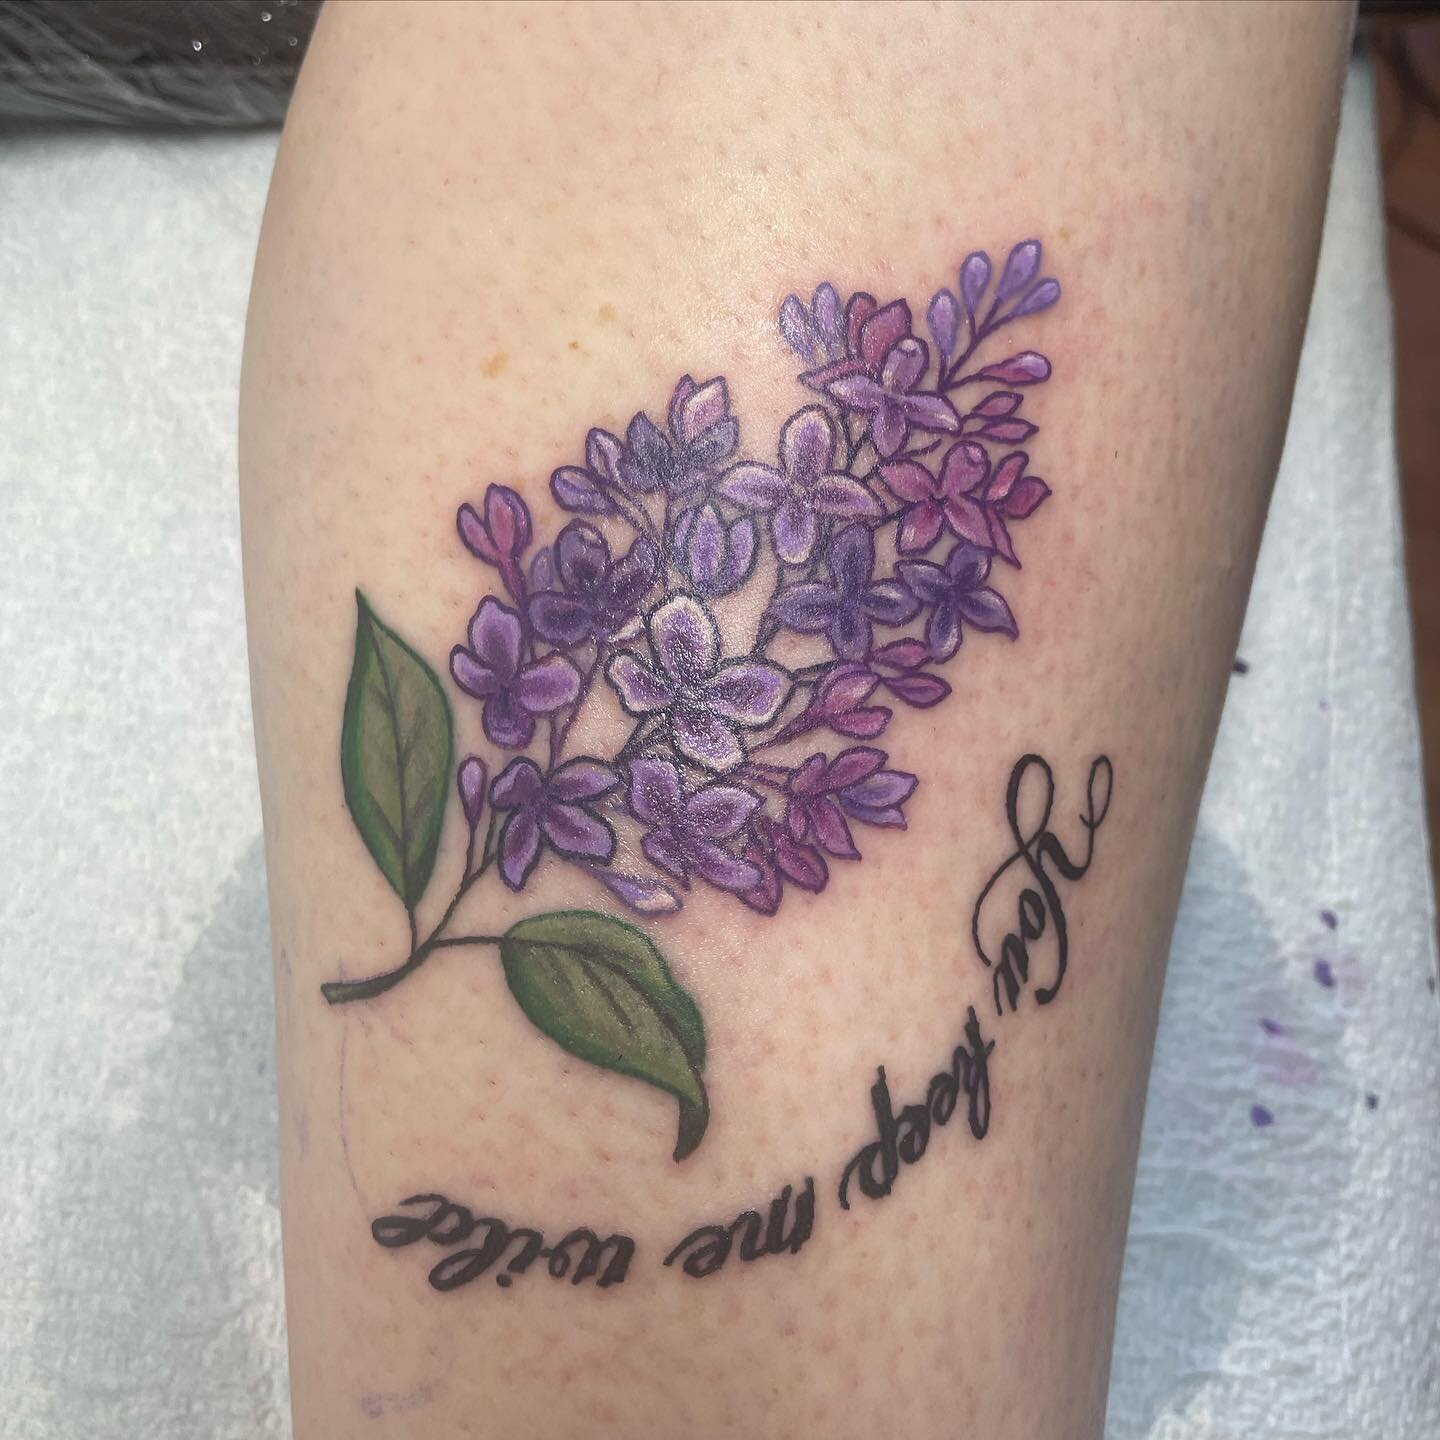 Lilacs from last week
✨
Made using:
@northerntattoosupply 
@goodguysupply 
@eikondevice 
@worldfamousink 
@fusion_ink 
@bishoprotary 
✨
@crimsondawncollective 
✨
#lilac #floraltattoo #colortattoo #customdesign #customtattoo #tattoocommunity #tattooso